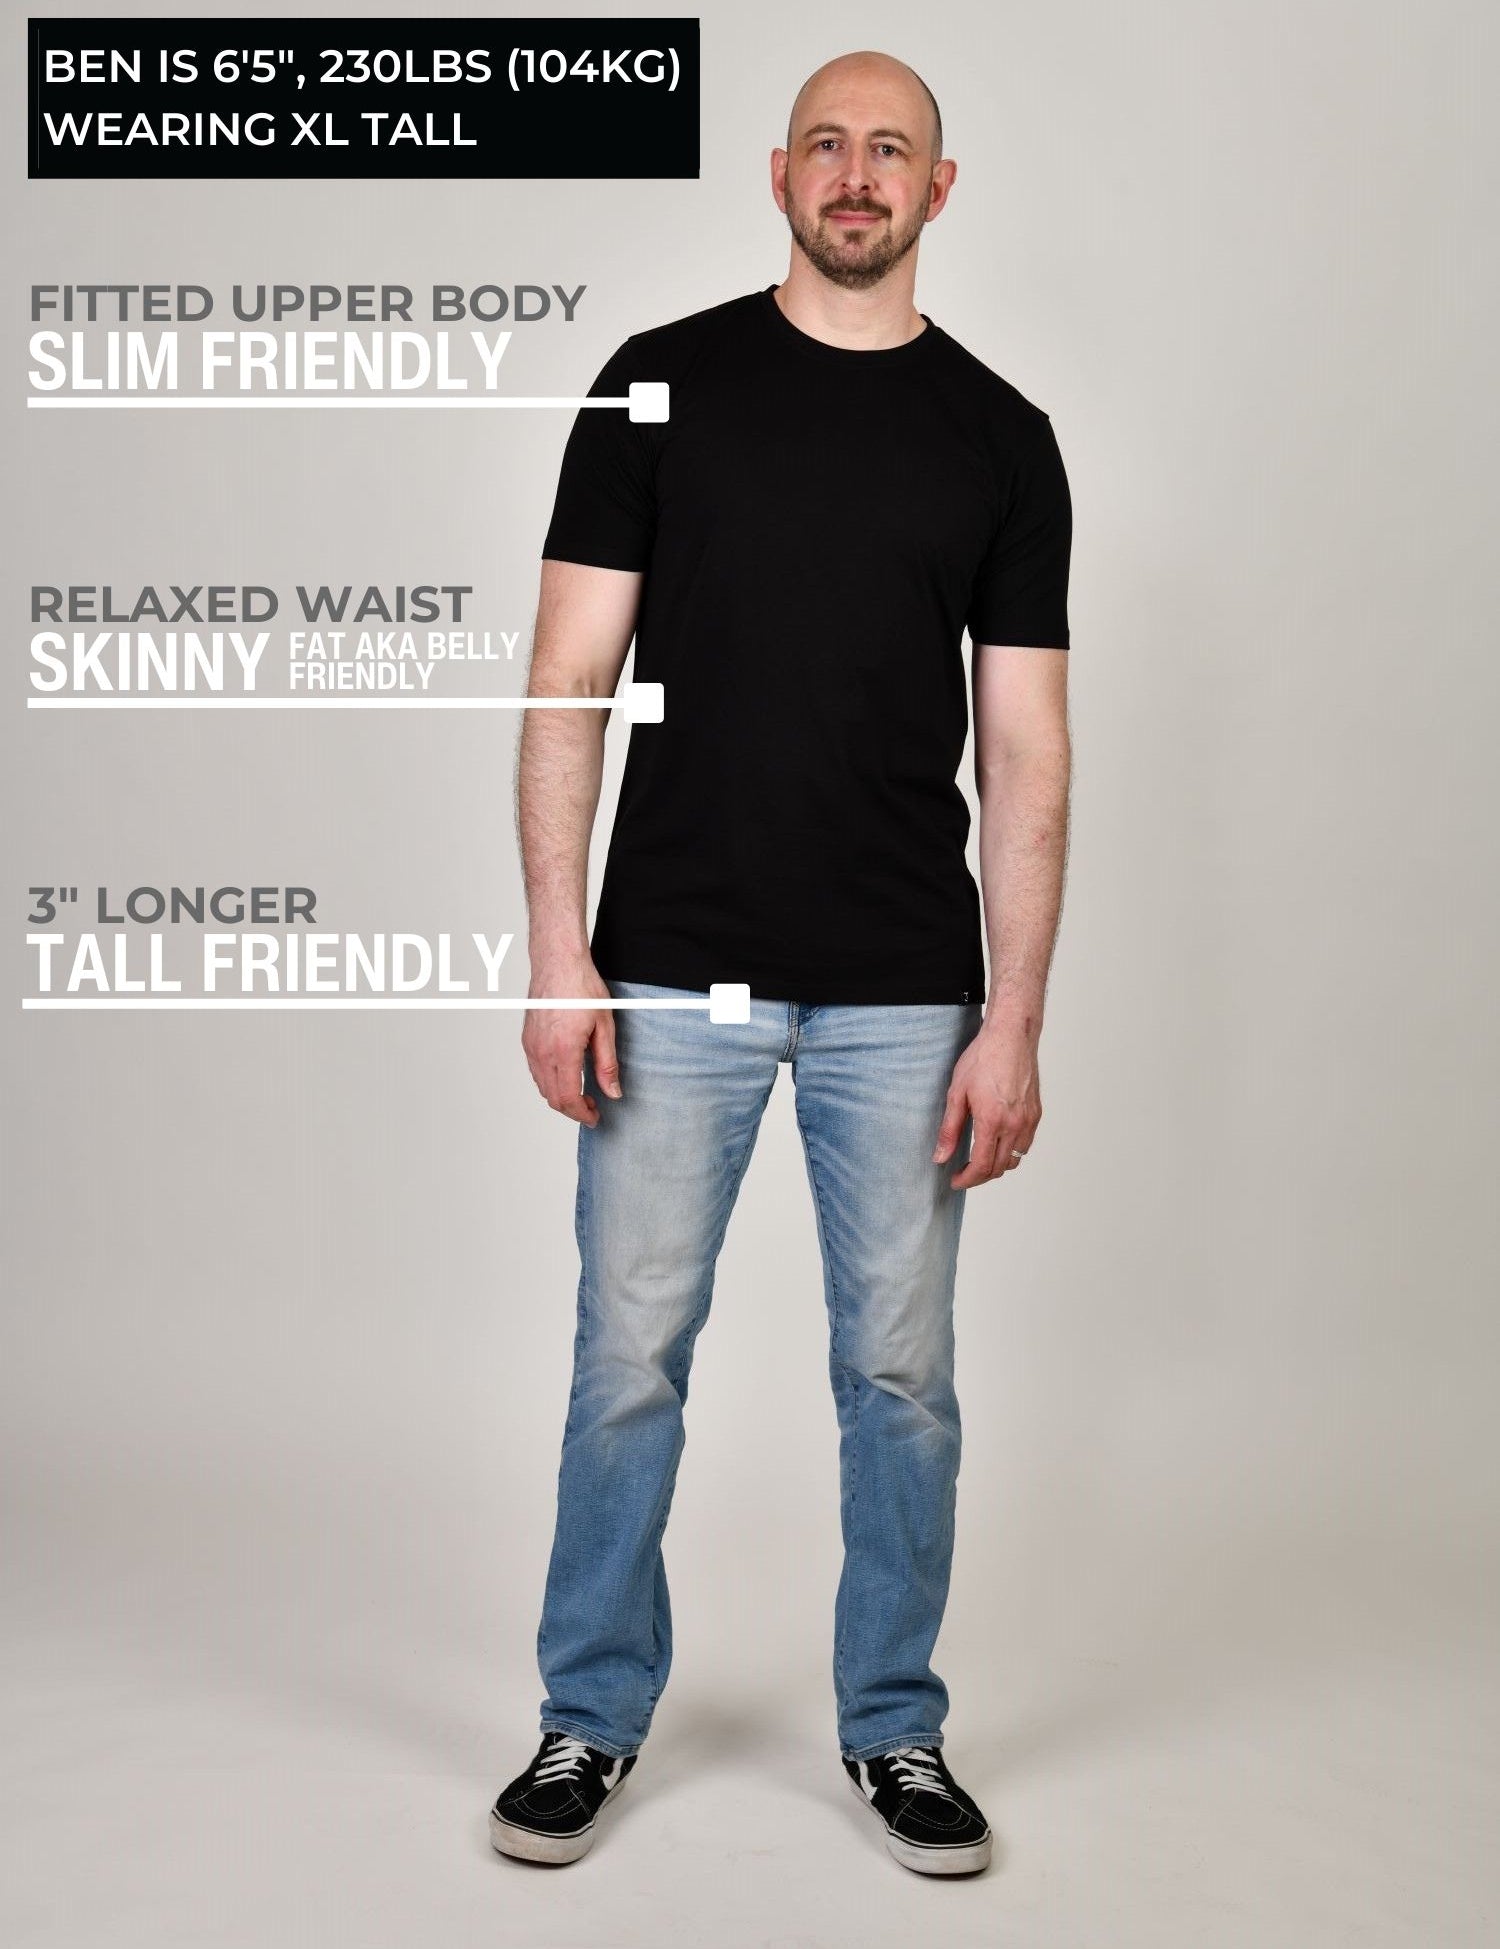 A head to toe shot of a tall muscular guy wearing a black XL tall t-shirt.